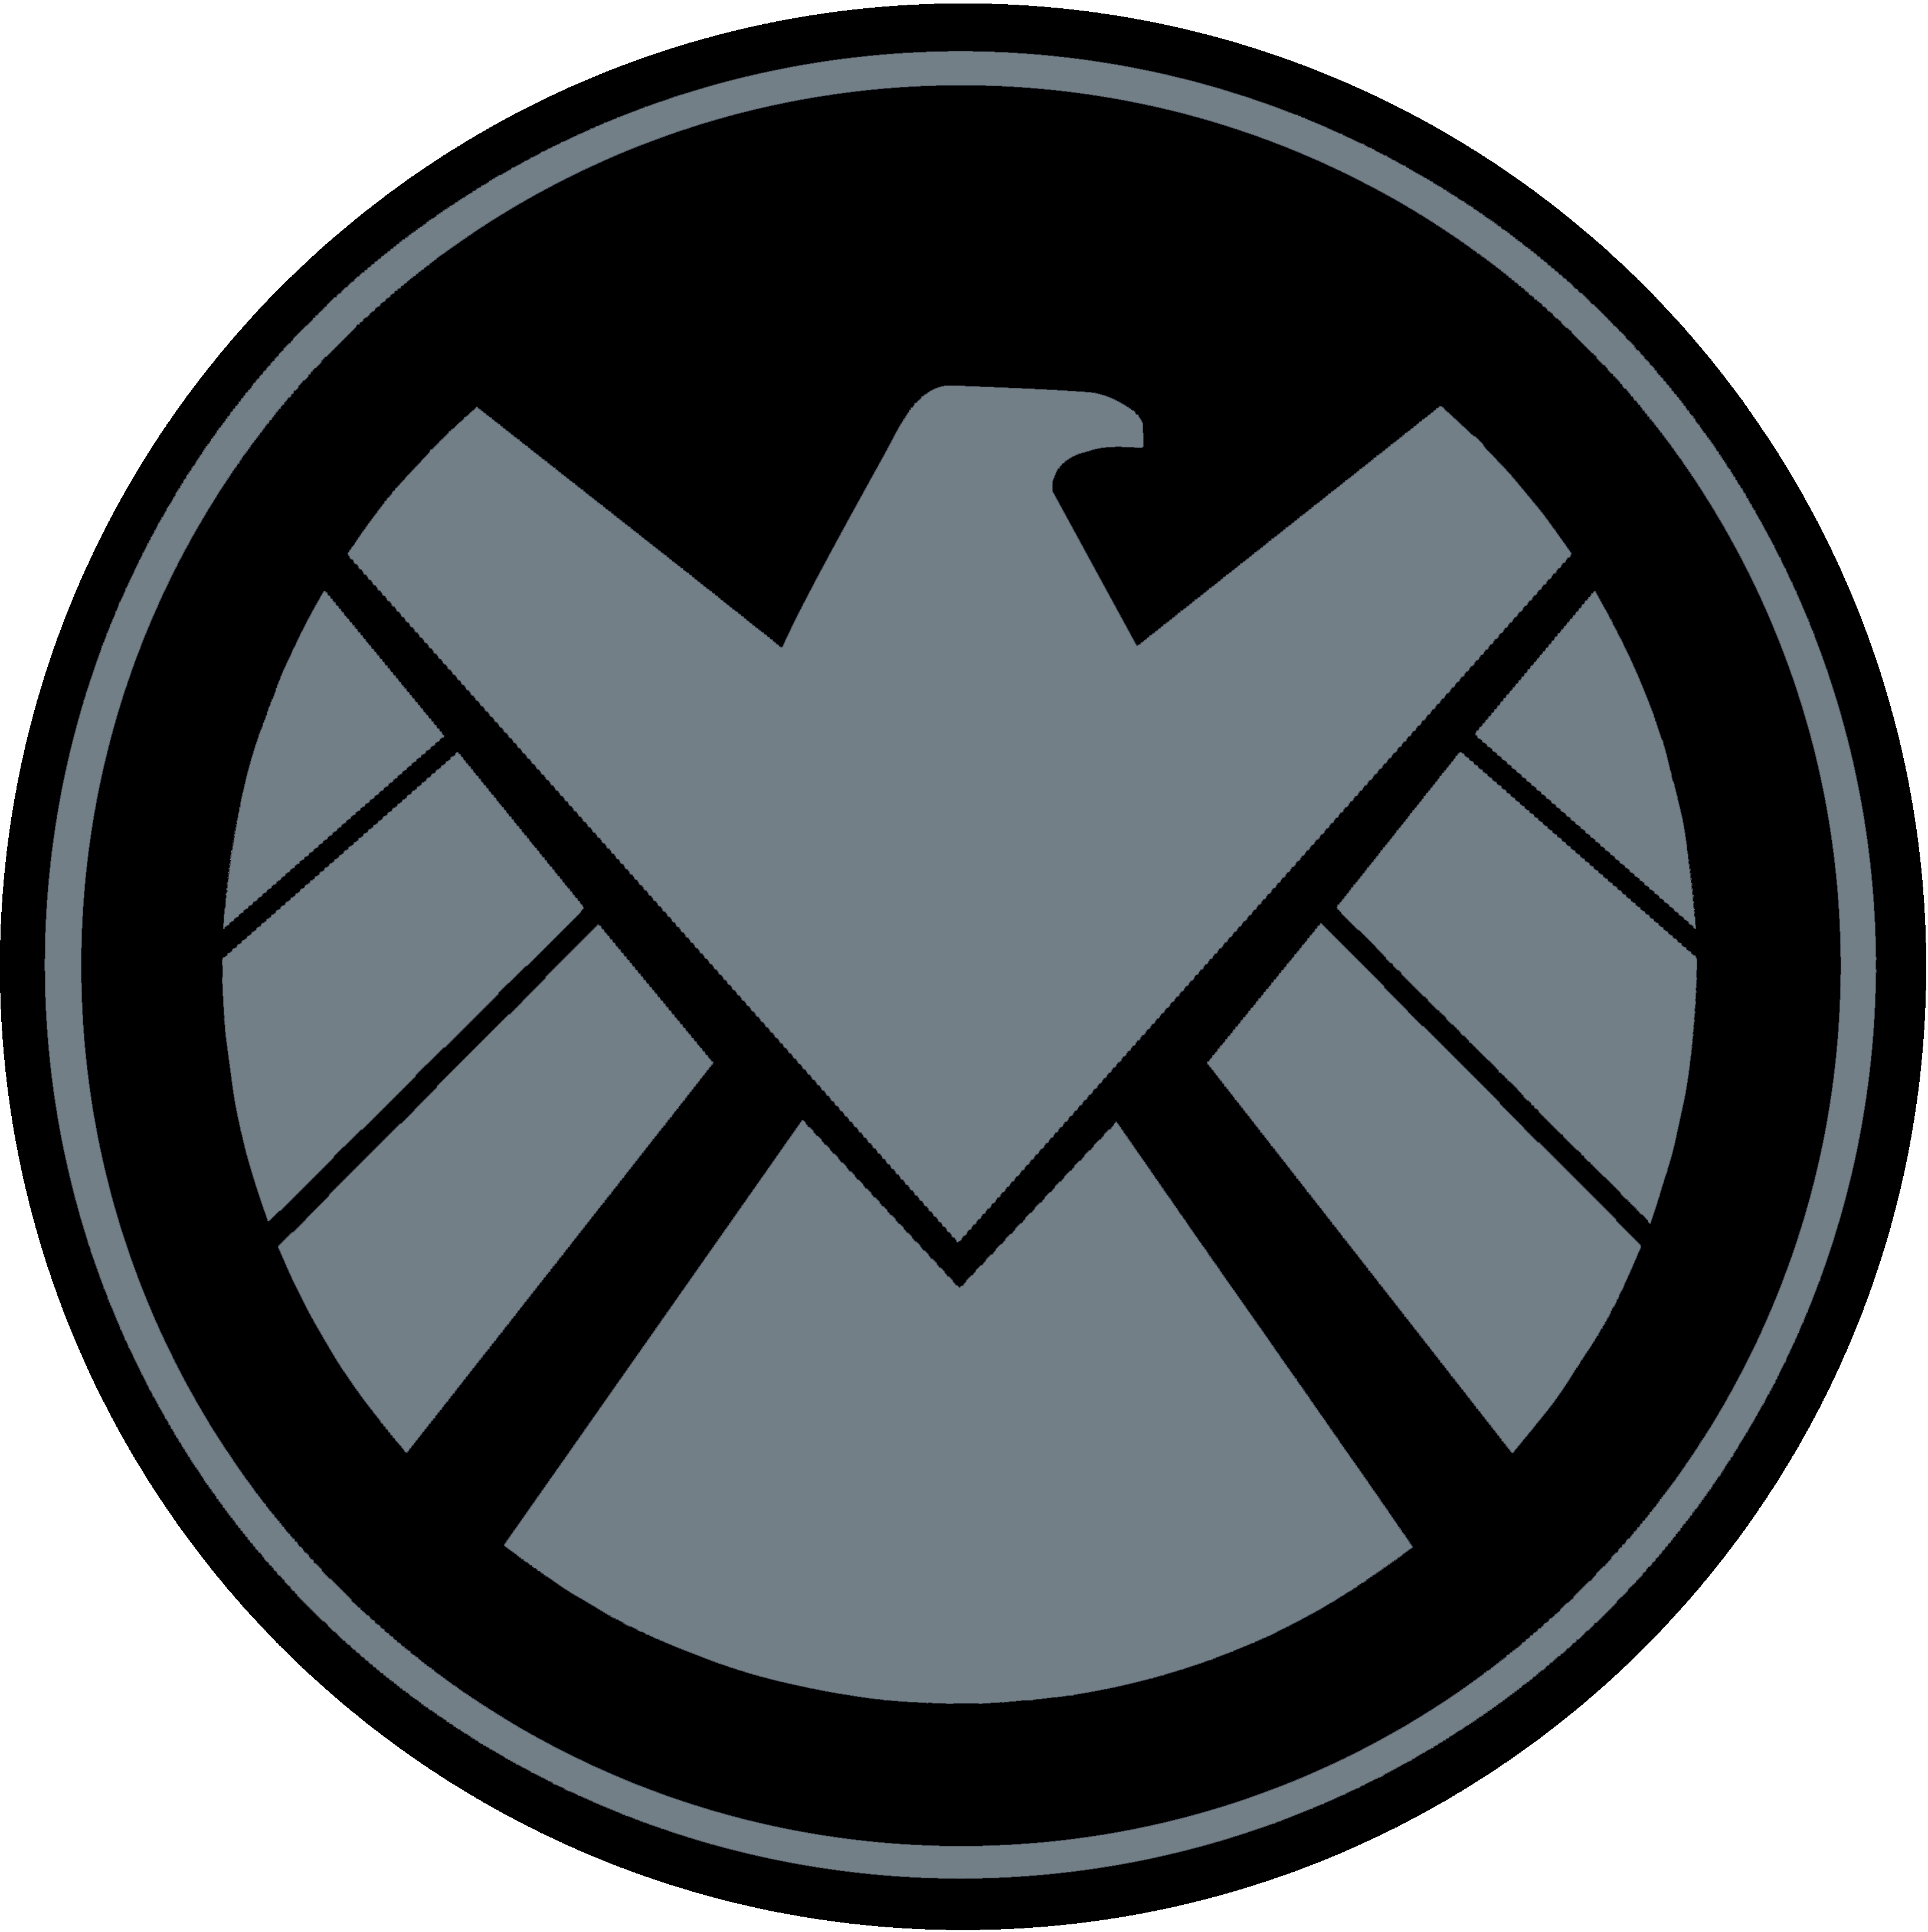 Avengers Shield Logo - The avengers shield Logos